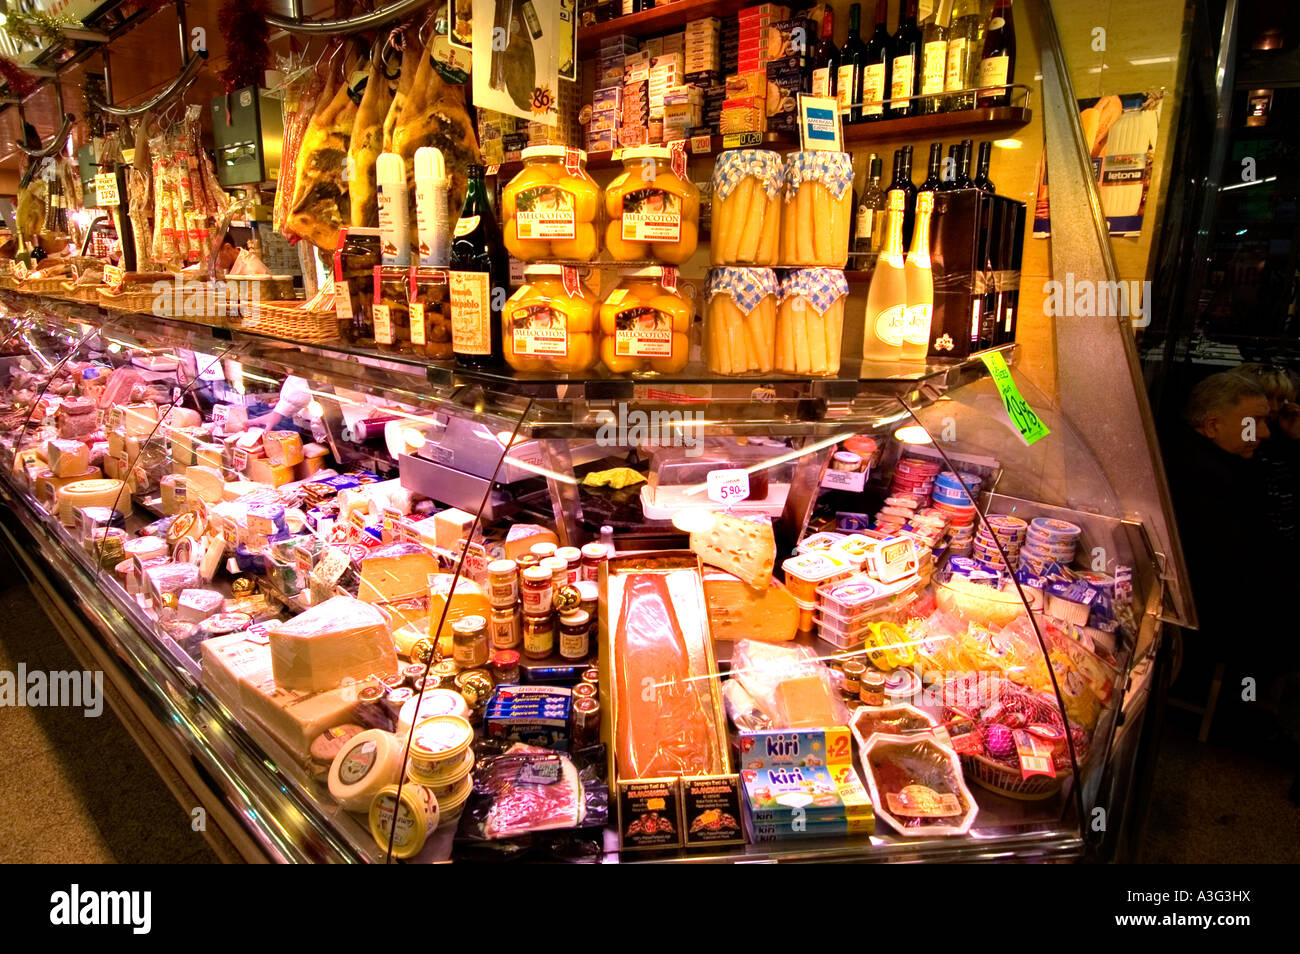 The Ramblas - The Mercat de Sant Josep de la Boquería Rambla covered market Barcelona Spain Spanish grocer grocery market Stock Photo